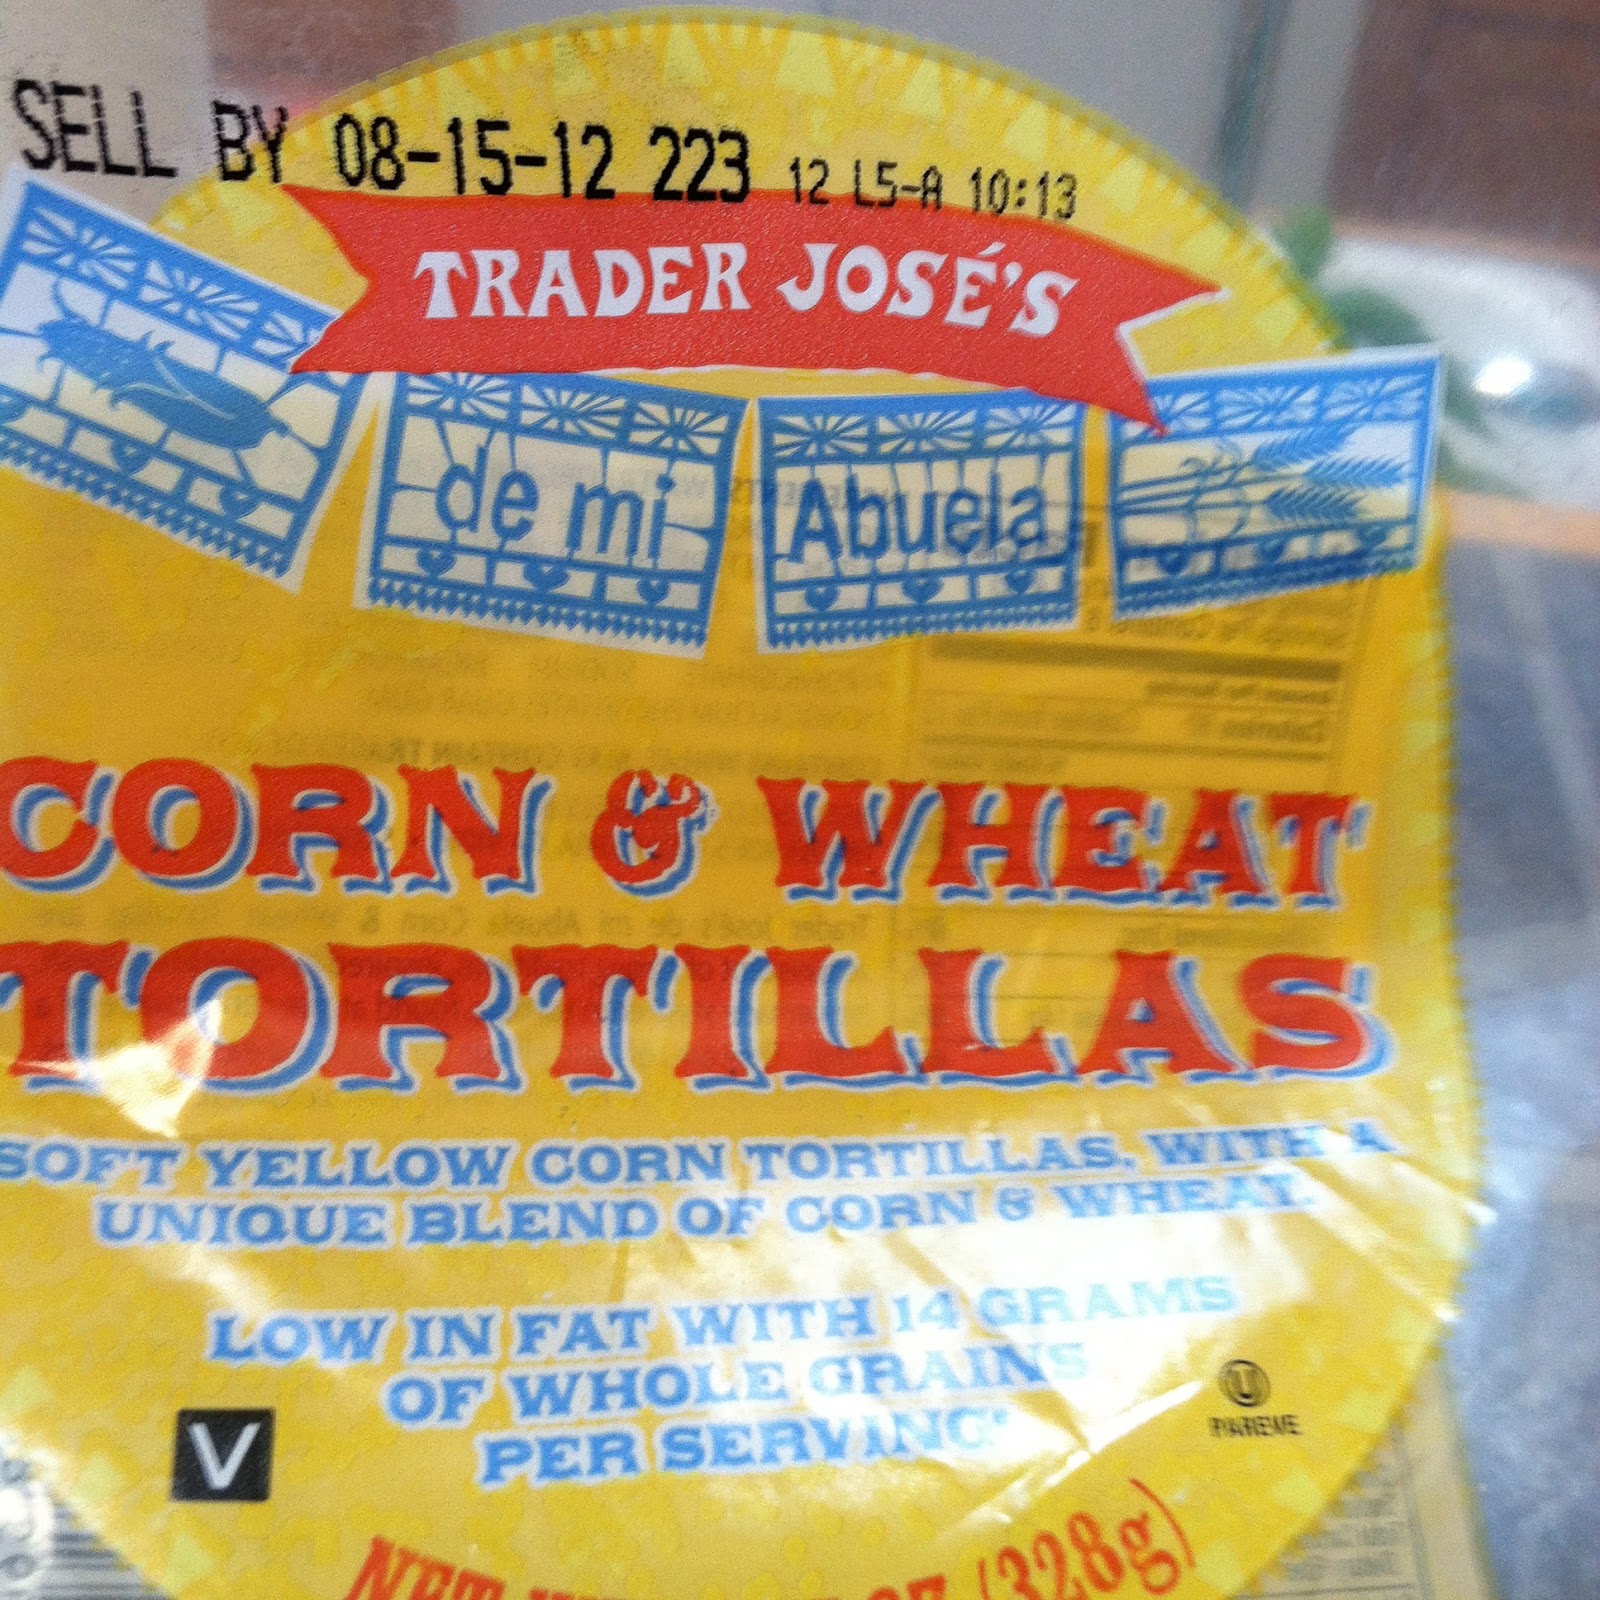 Trader Joe S Wheat Tortillas Pc Android iPhone And iPad Wallpaper